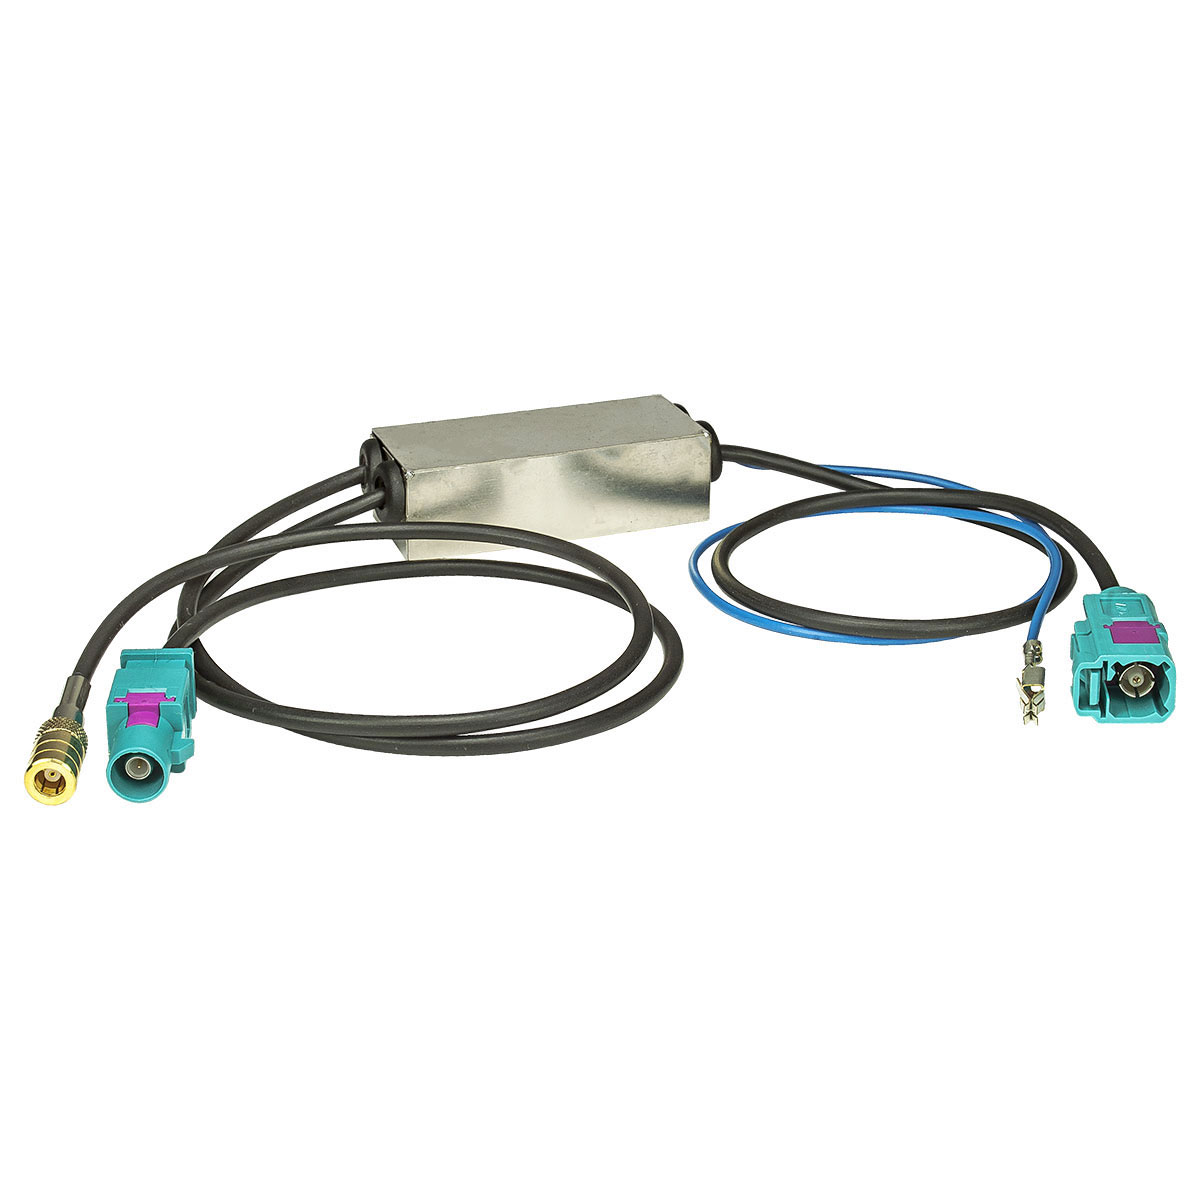 AM/FM DAB+ Antennensplitter Adapter adaptiert von fakra auf DIN (m) / SMB (f)